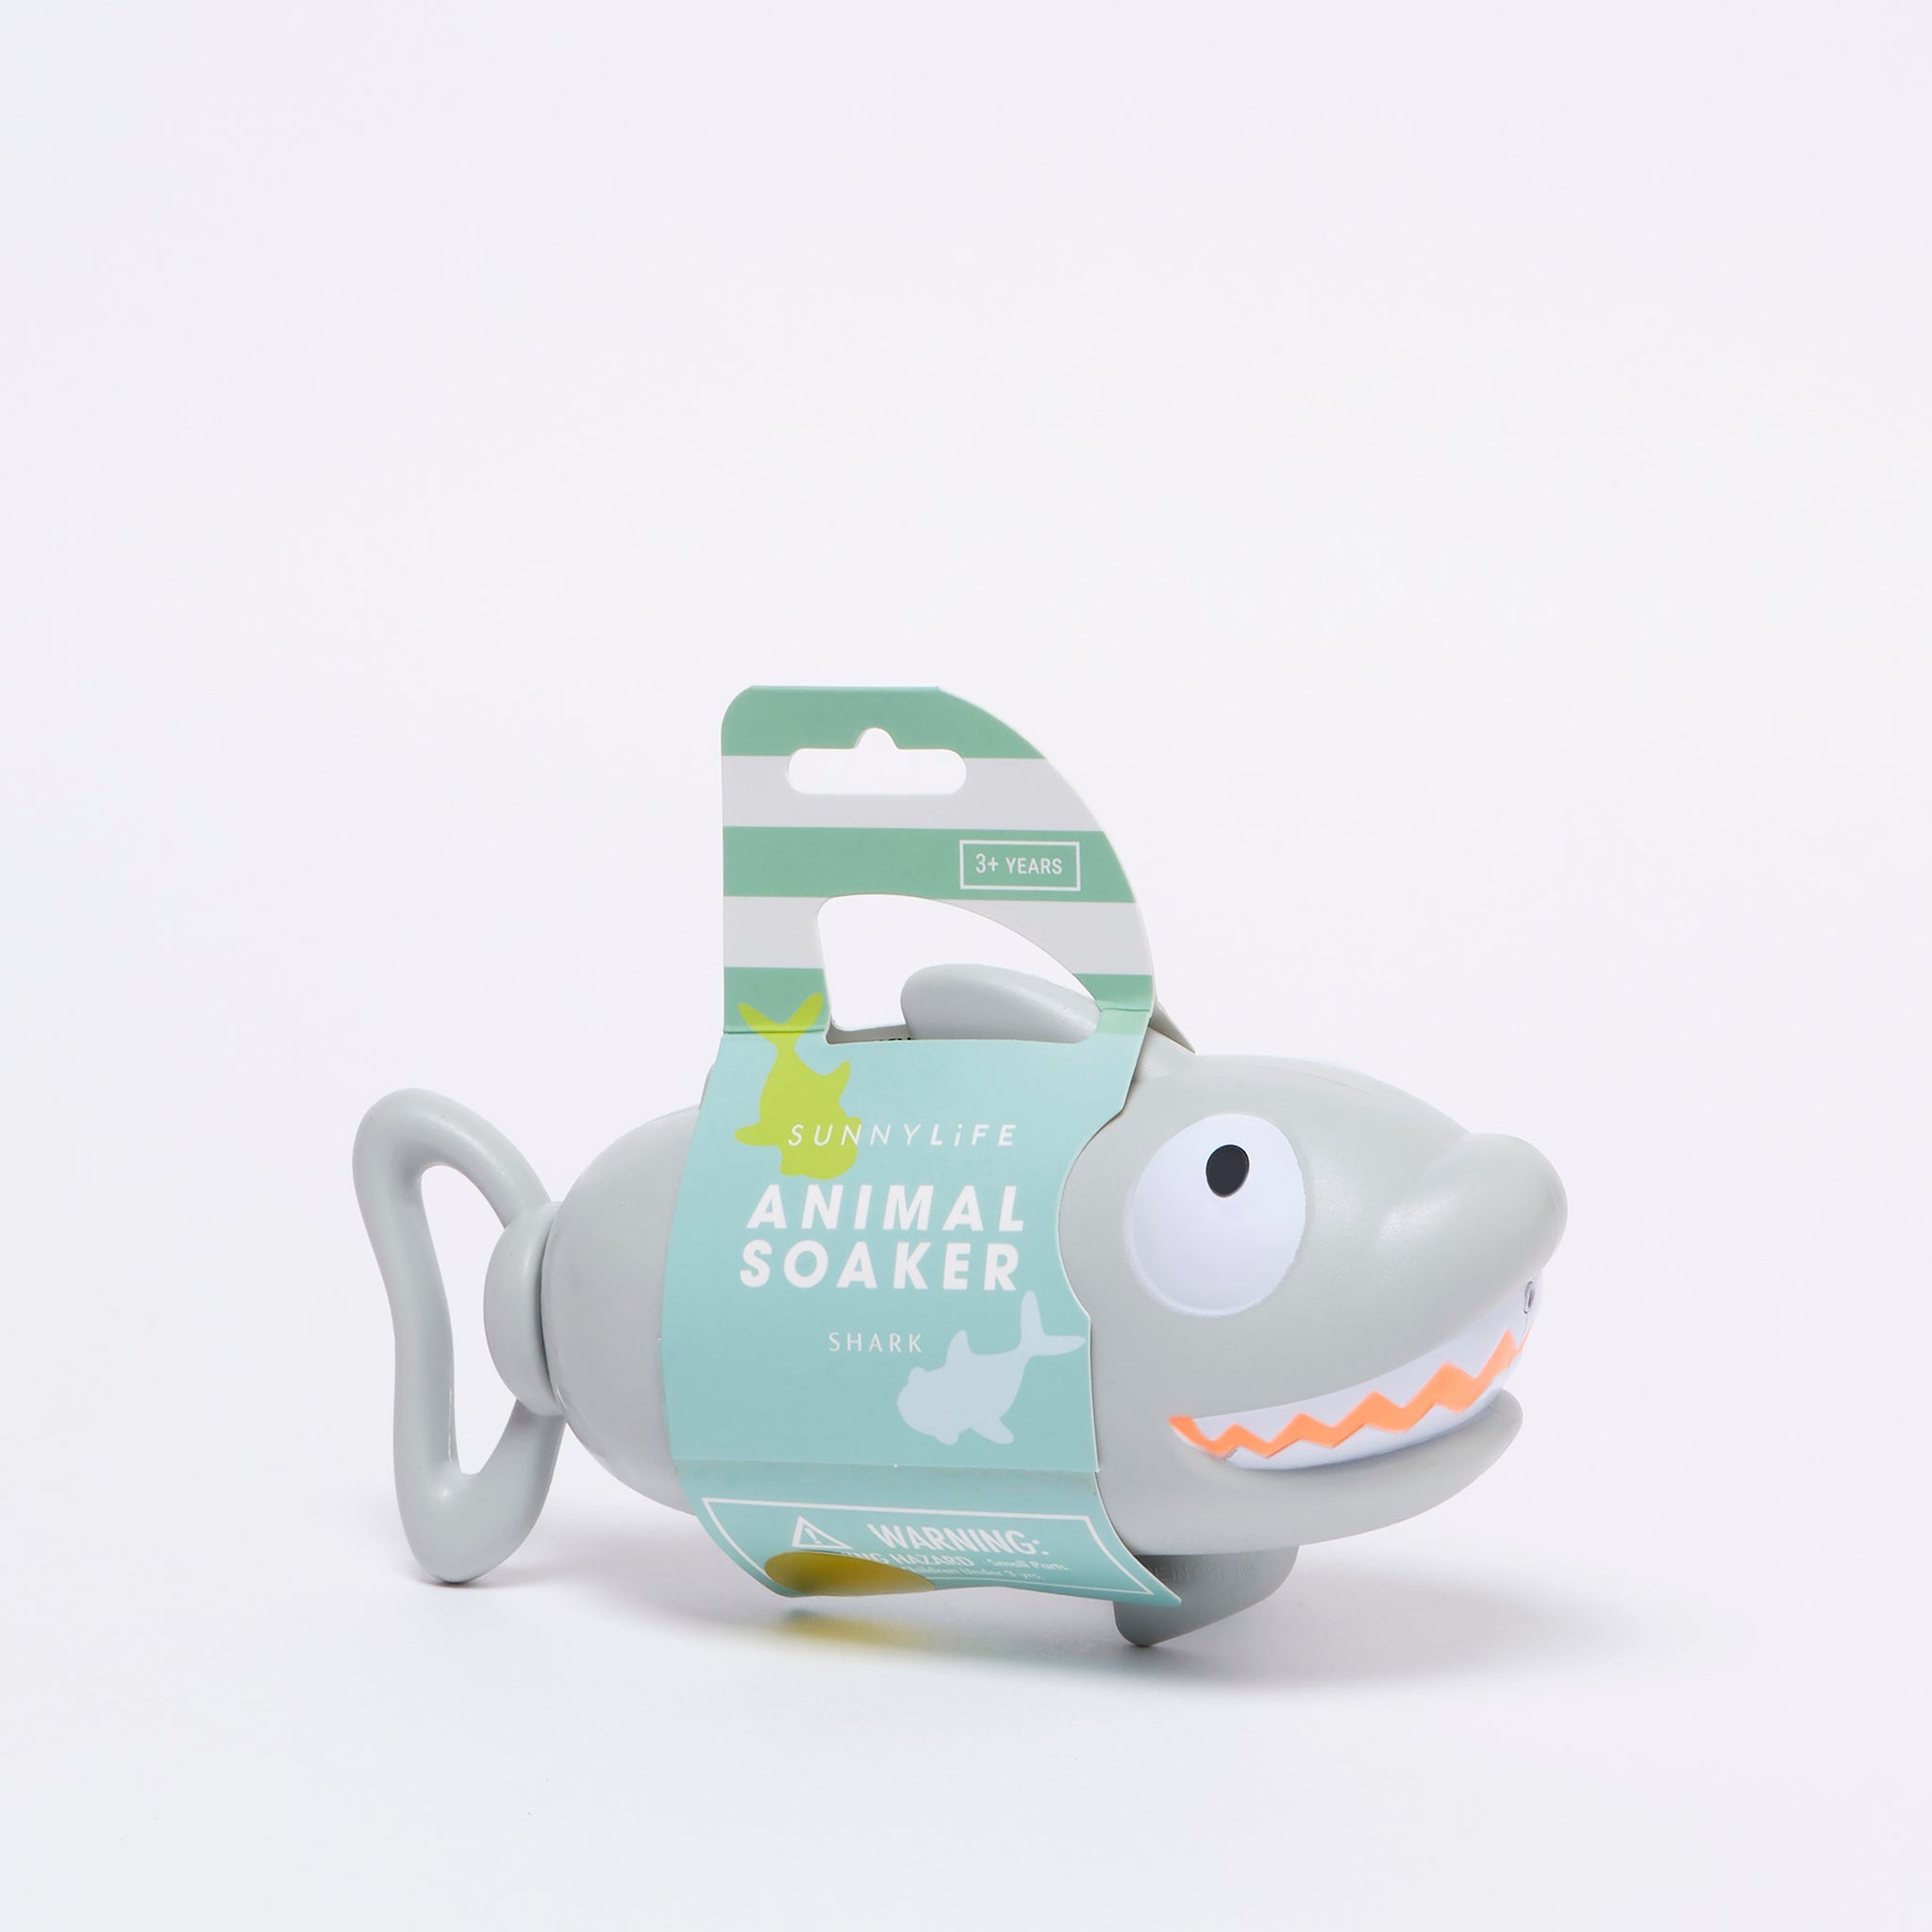 SUNNYLiFE | Animal Soaker | Shark